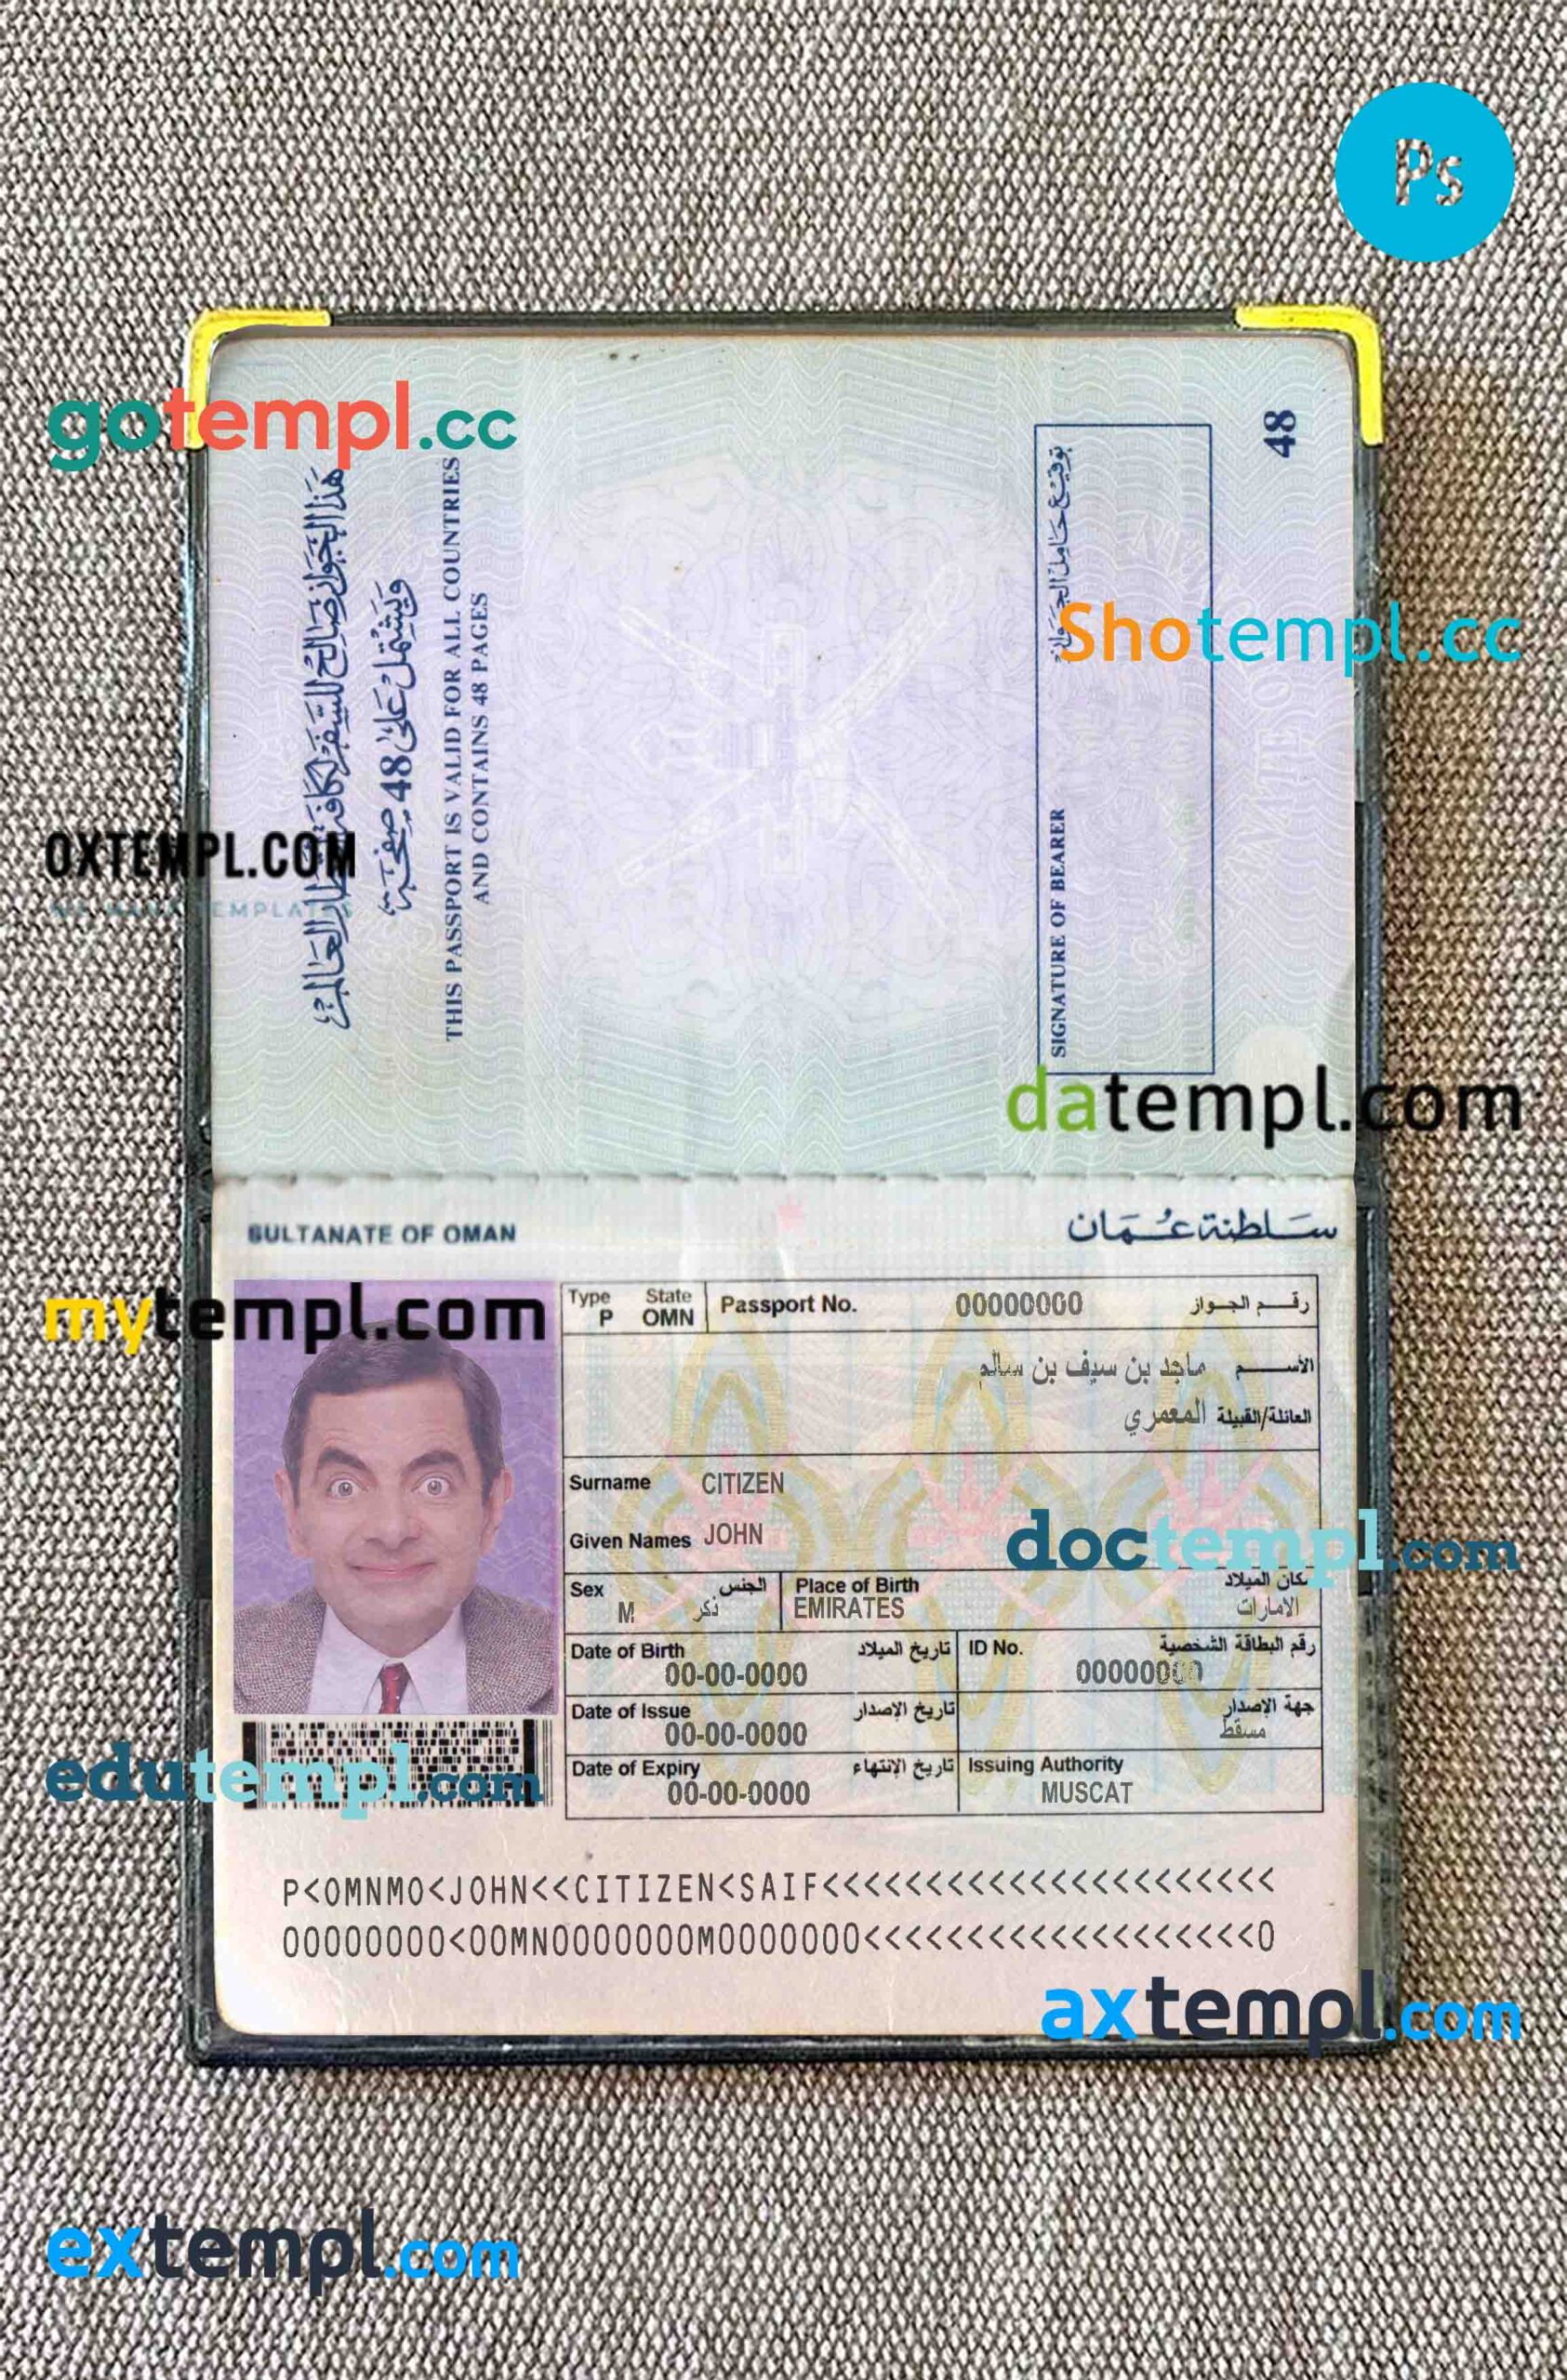 Venezuela passport PSD files, scan and photo look templates, 2 in 1